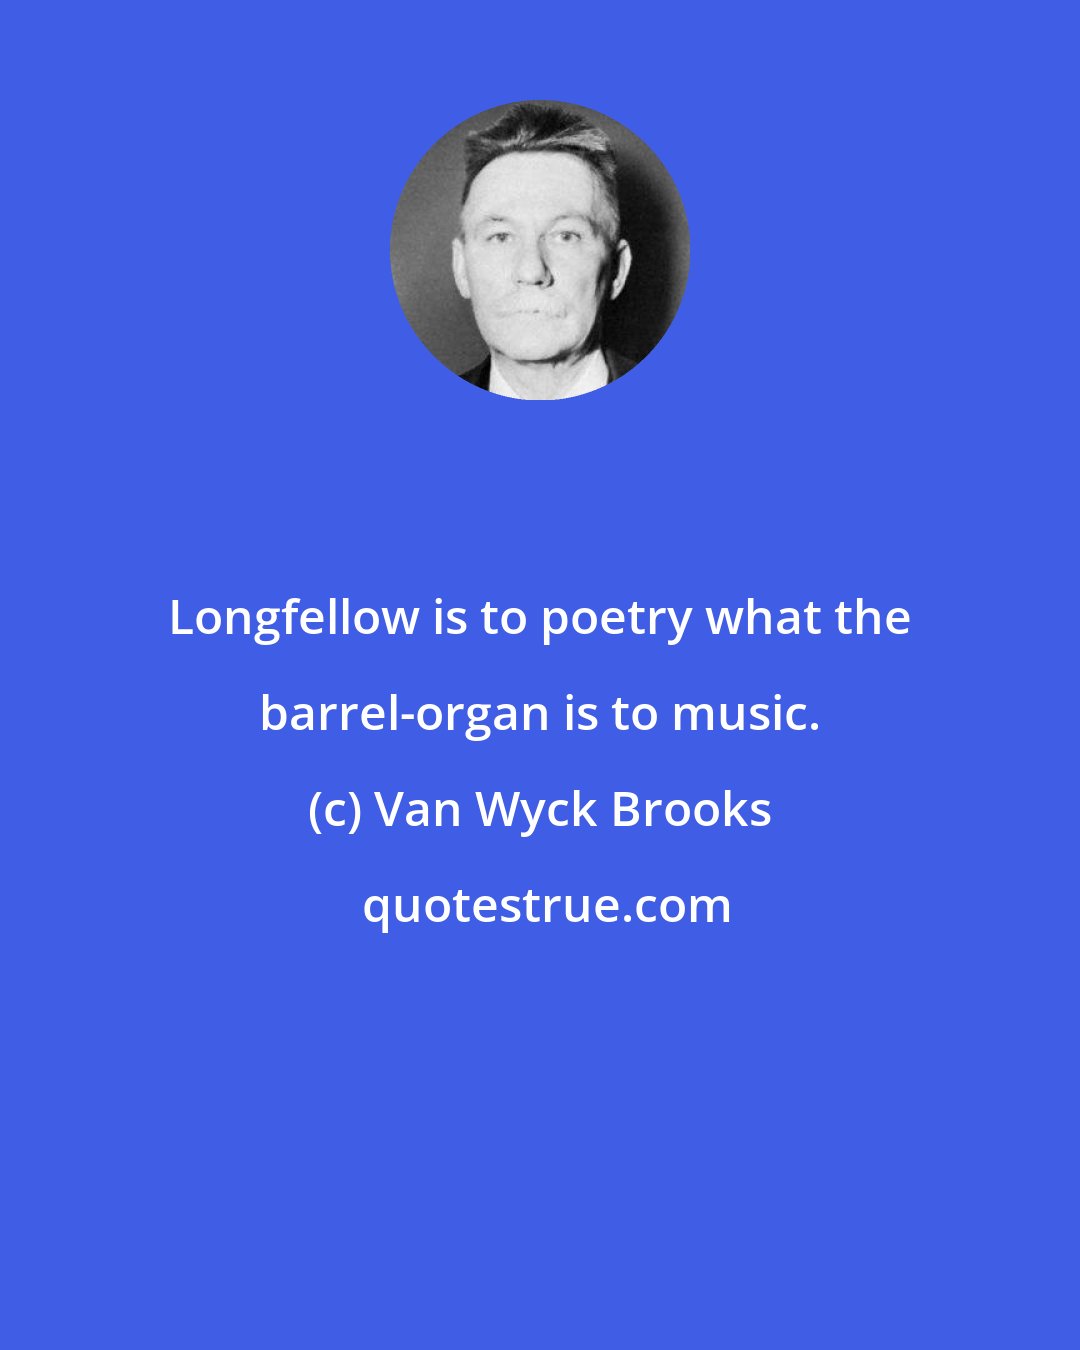 Van Wyck Brooks: Longfellow is to poetry what the barrel-organ is to music.